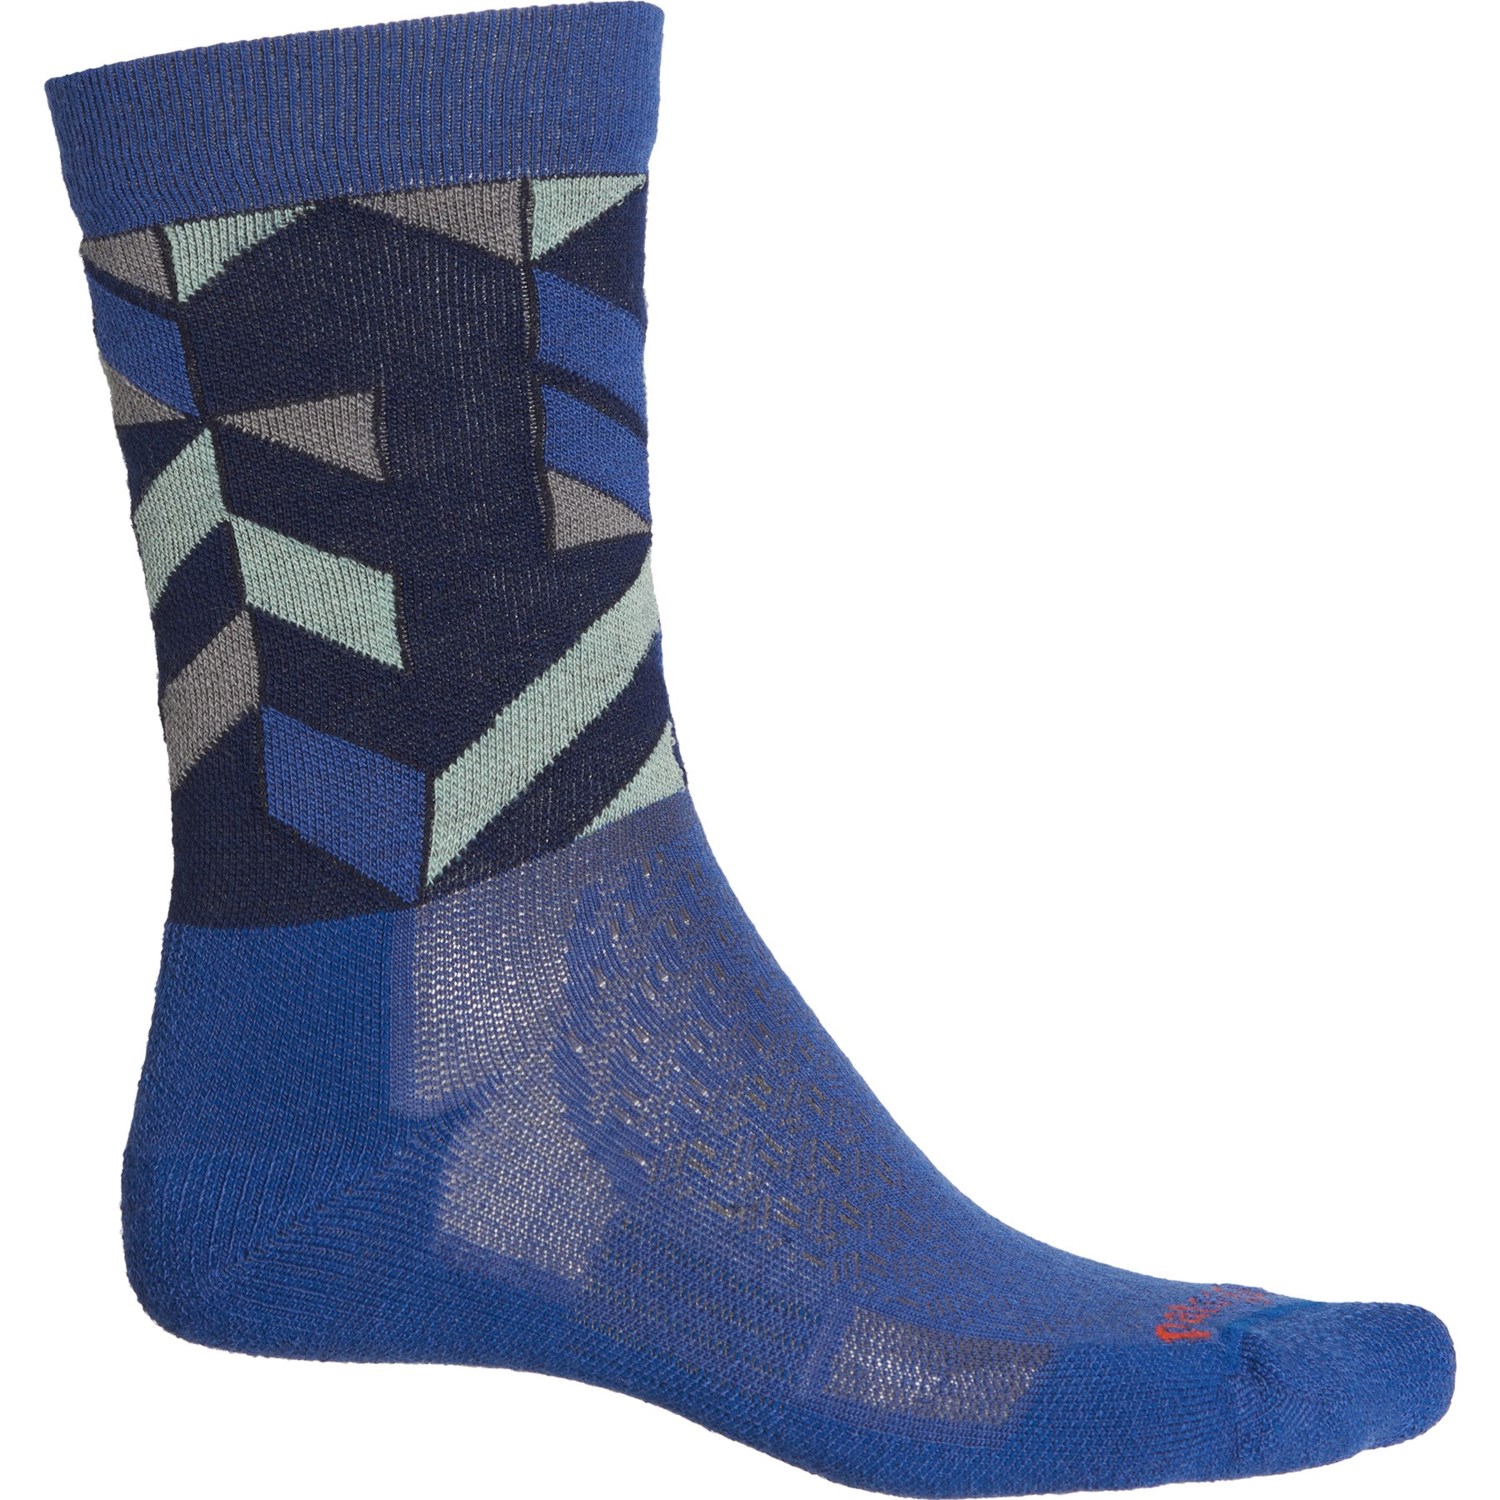 Patagonia High-Performance Socks - Merino Wool, Crew (For Men and Women)